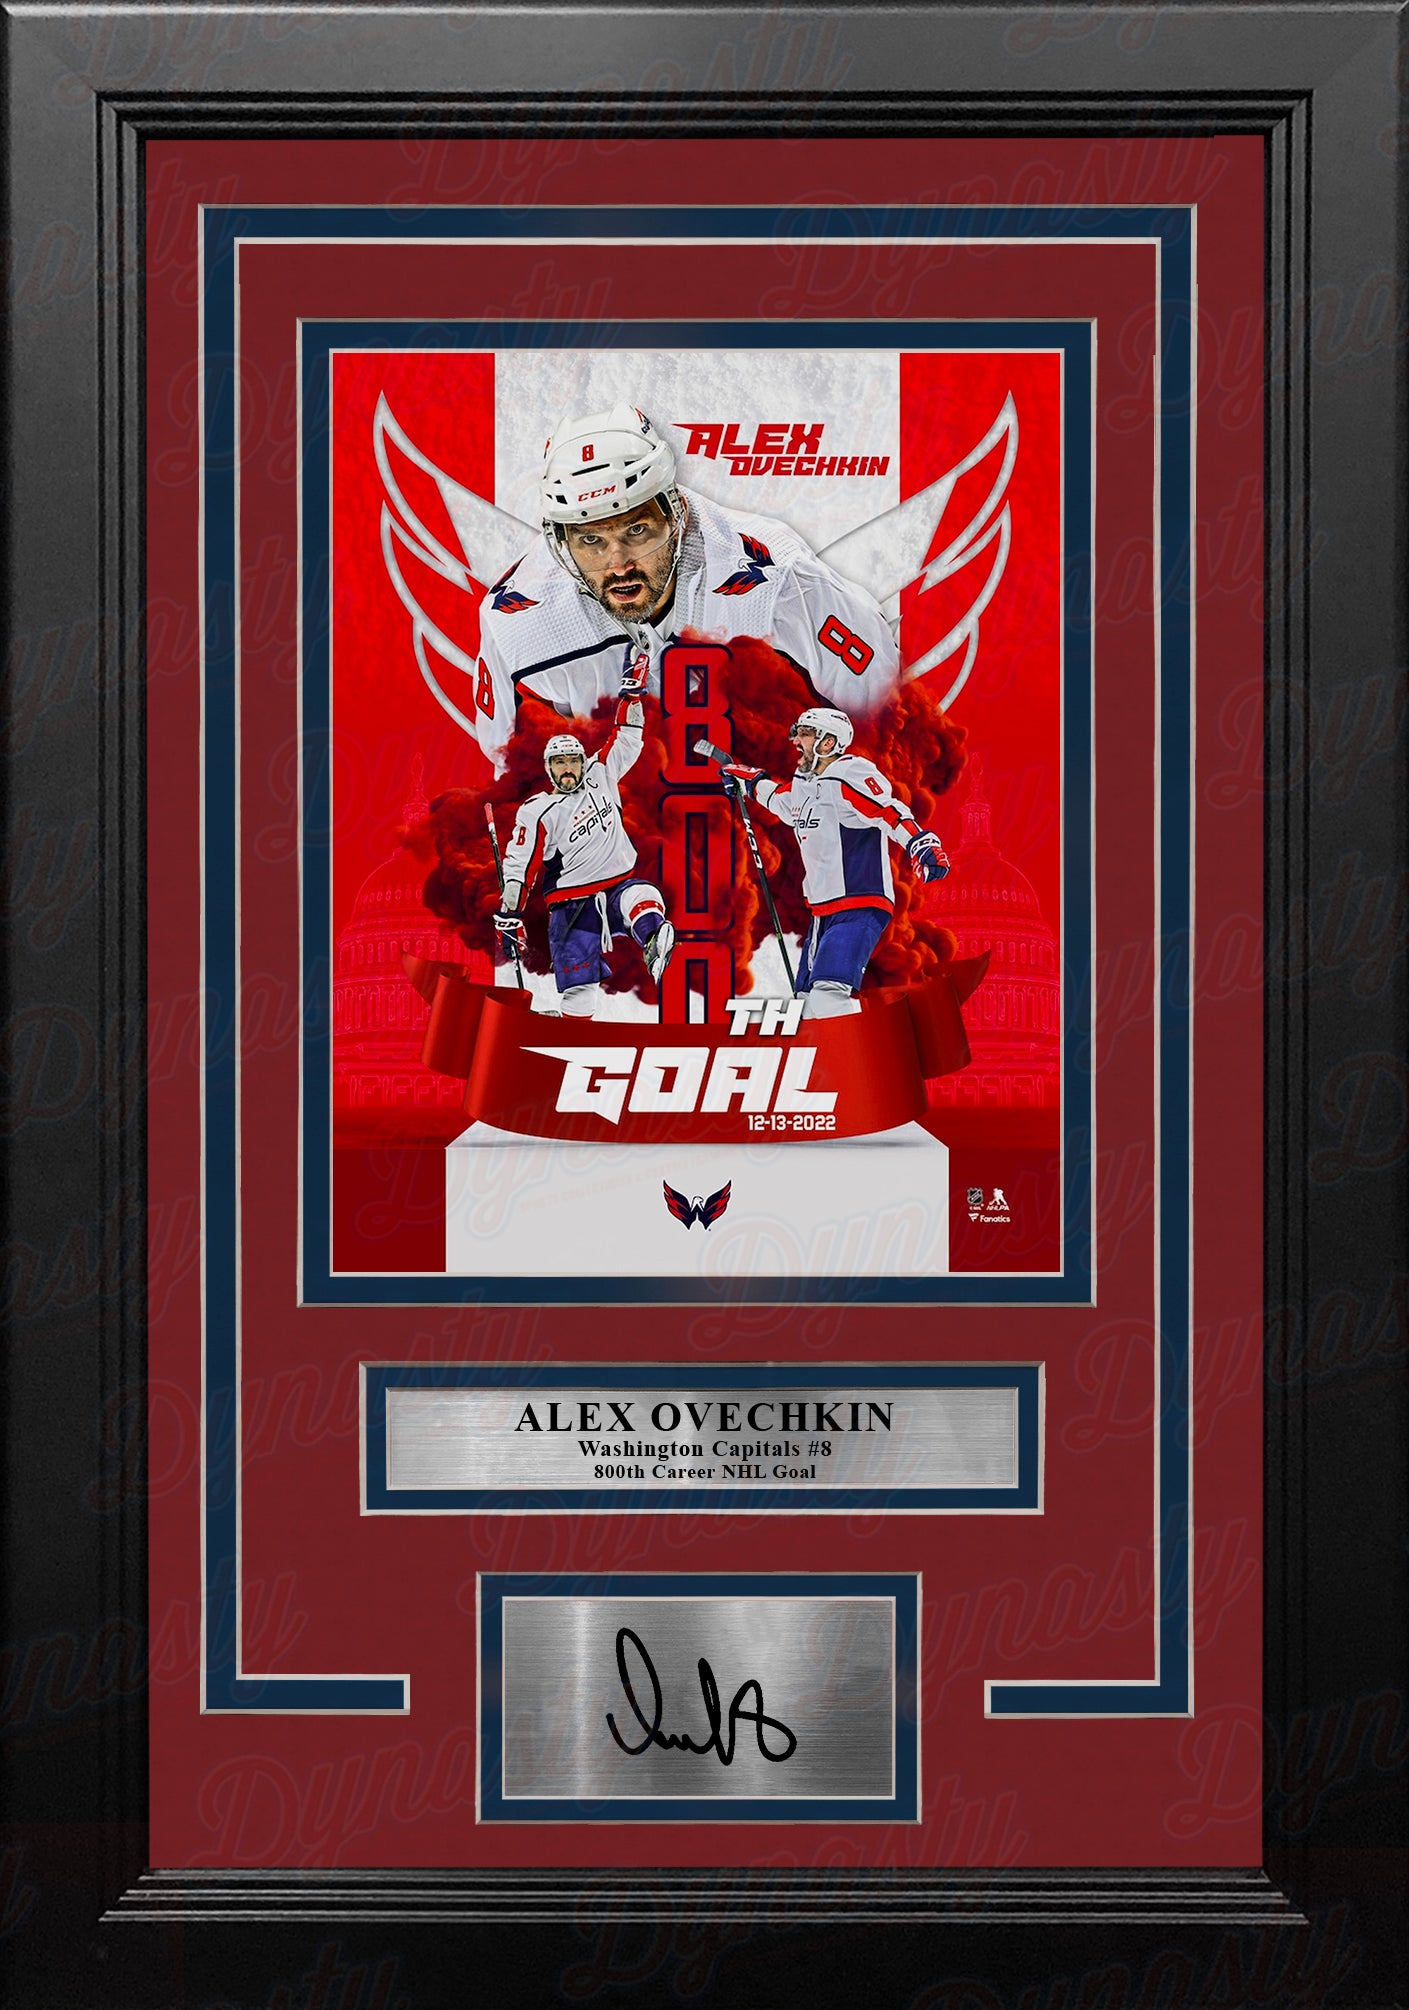 Alex Ovechkin Washington Capitals 800th Career Goal 8x10 Framed Hockey Photo with Engraved Autograph - Dynasty Sports & Framing 